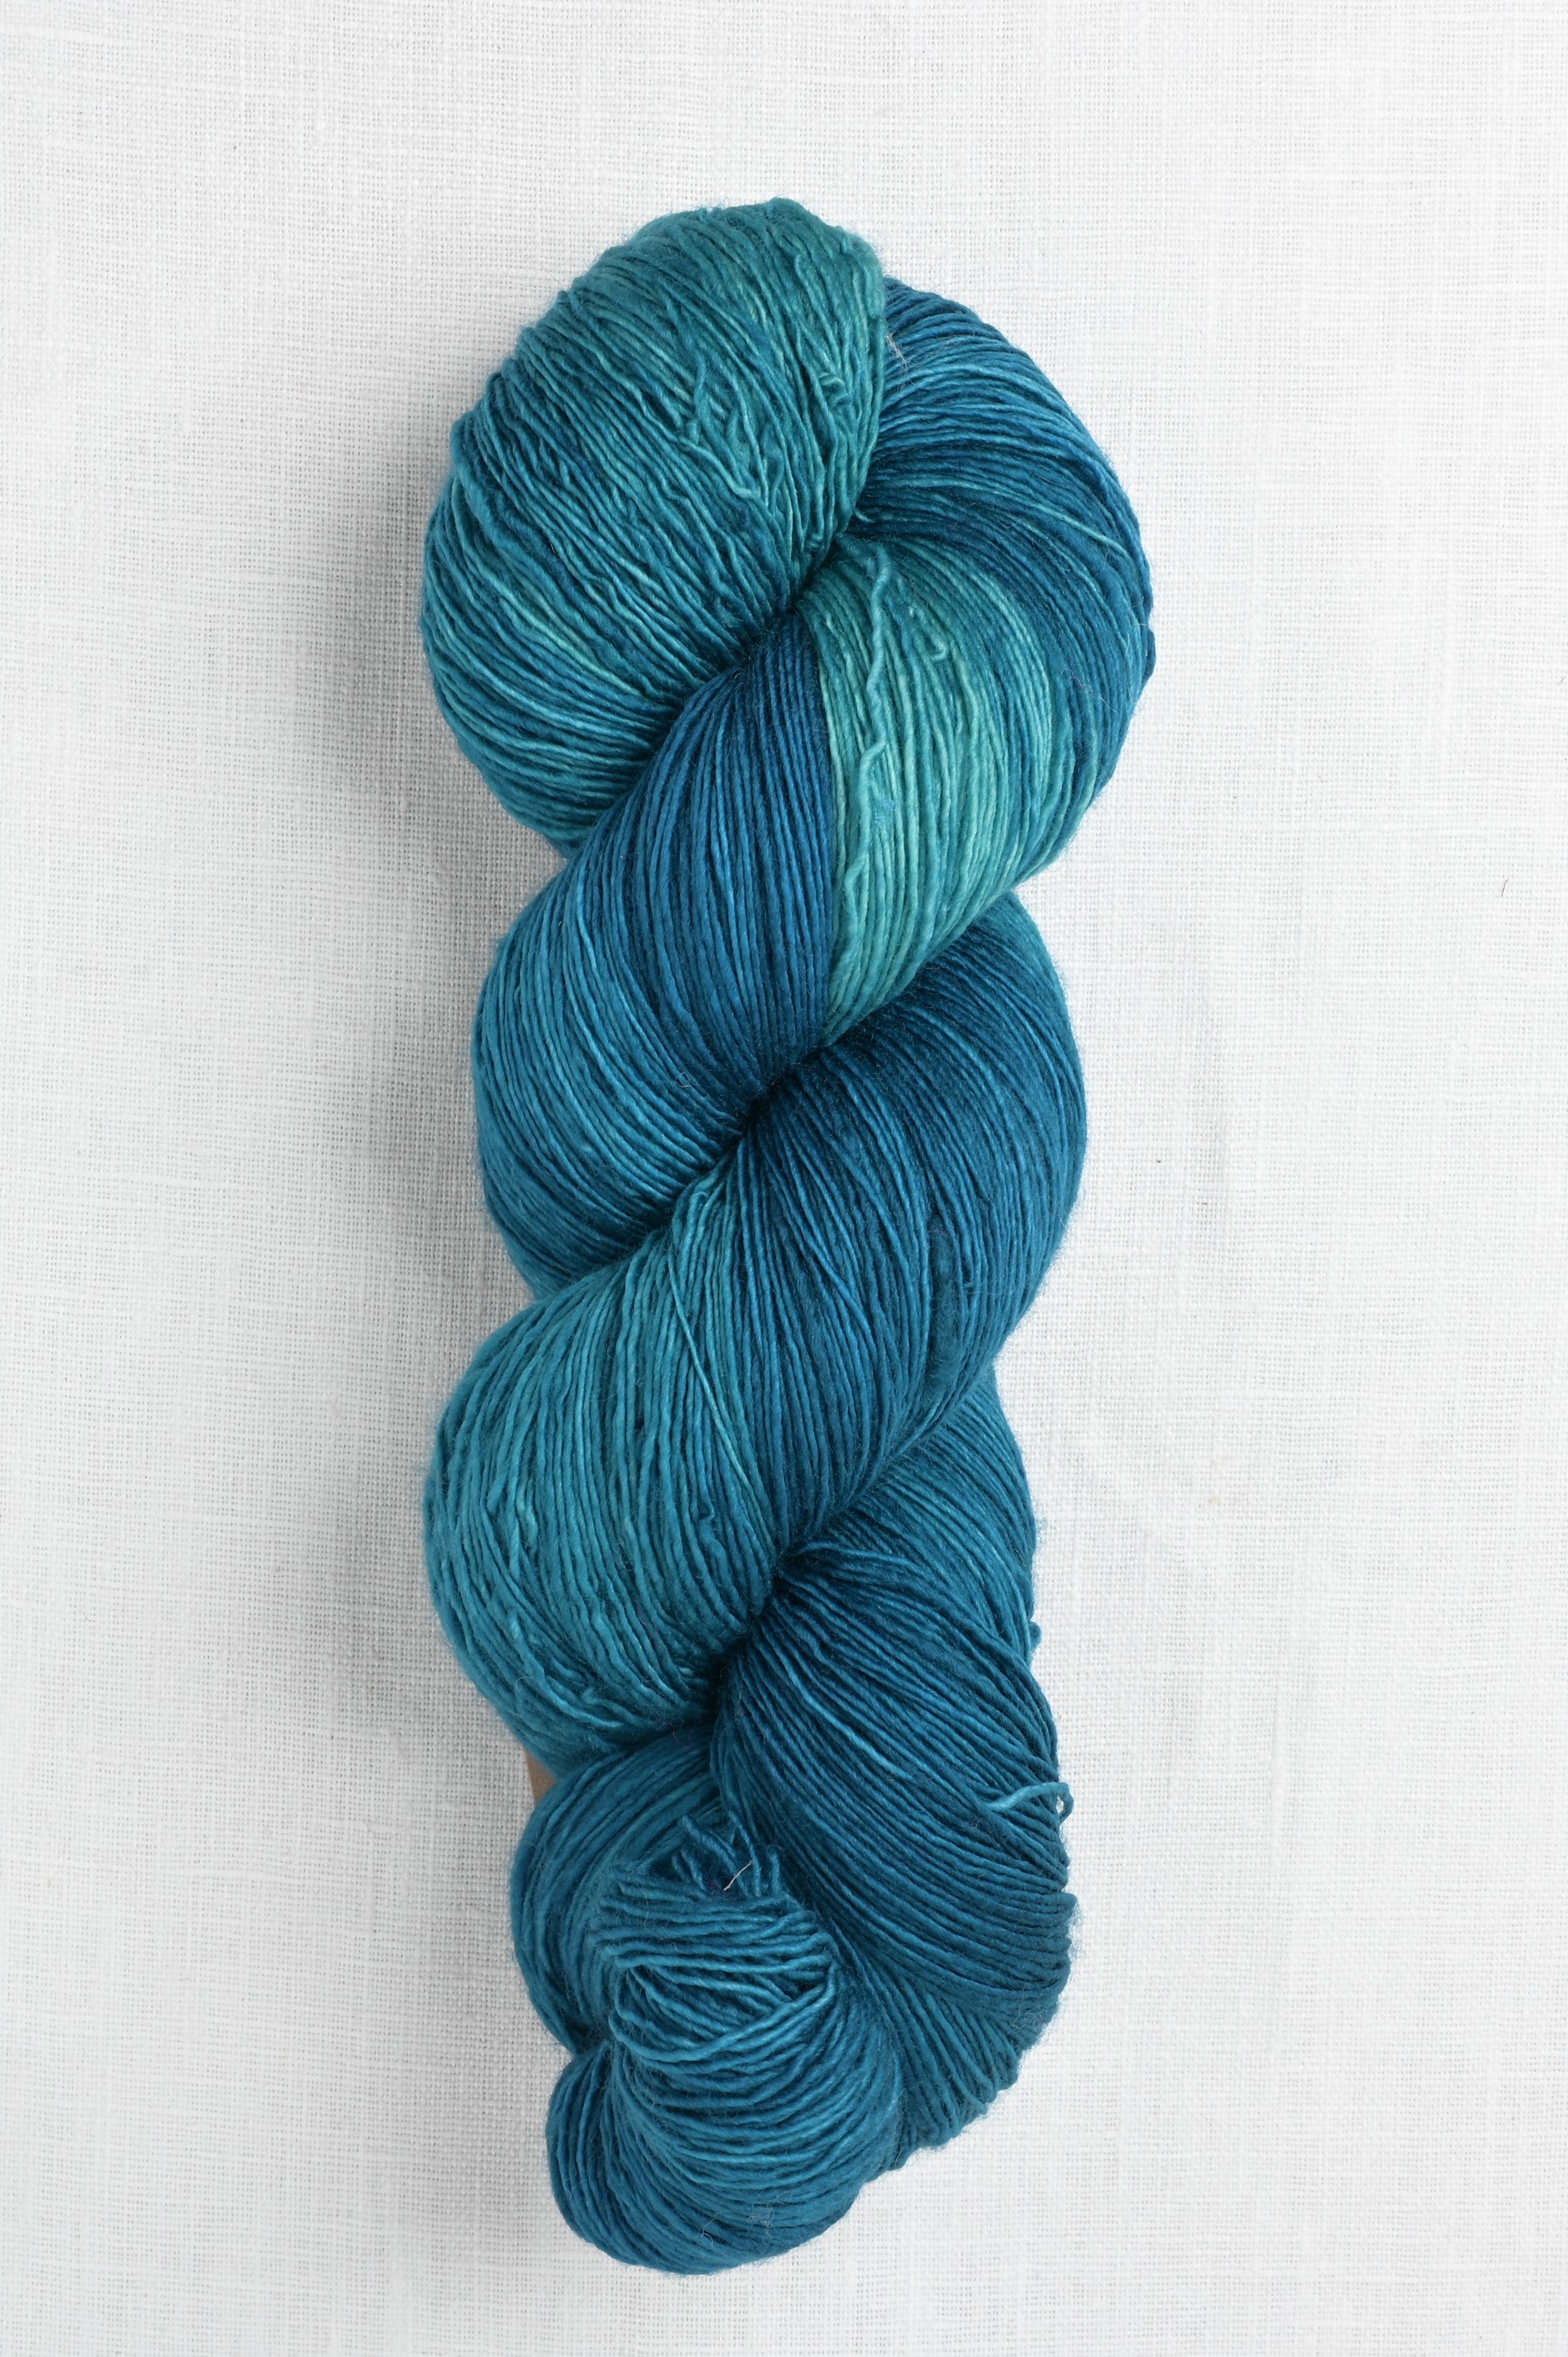 Hand-Dyed Yarn for Amigurumi + Darwin the Turtle - Moonbeam Stitches